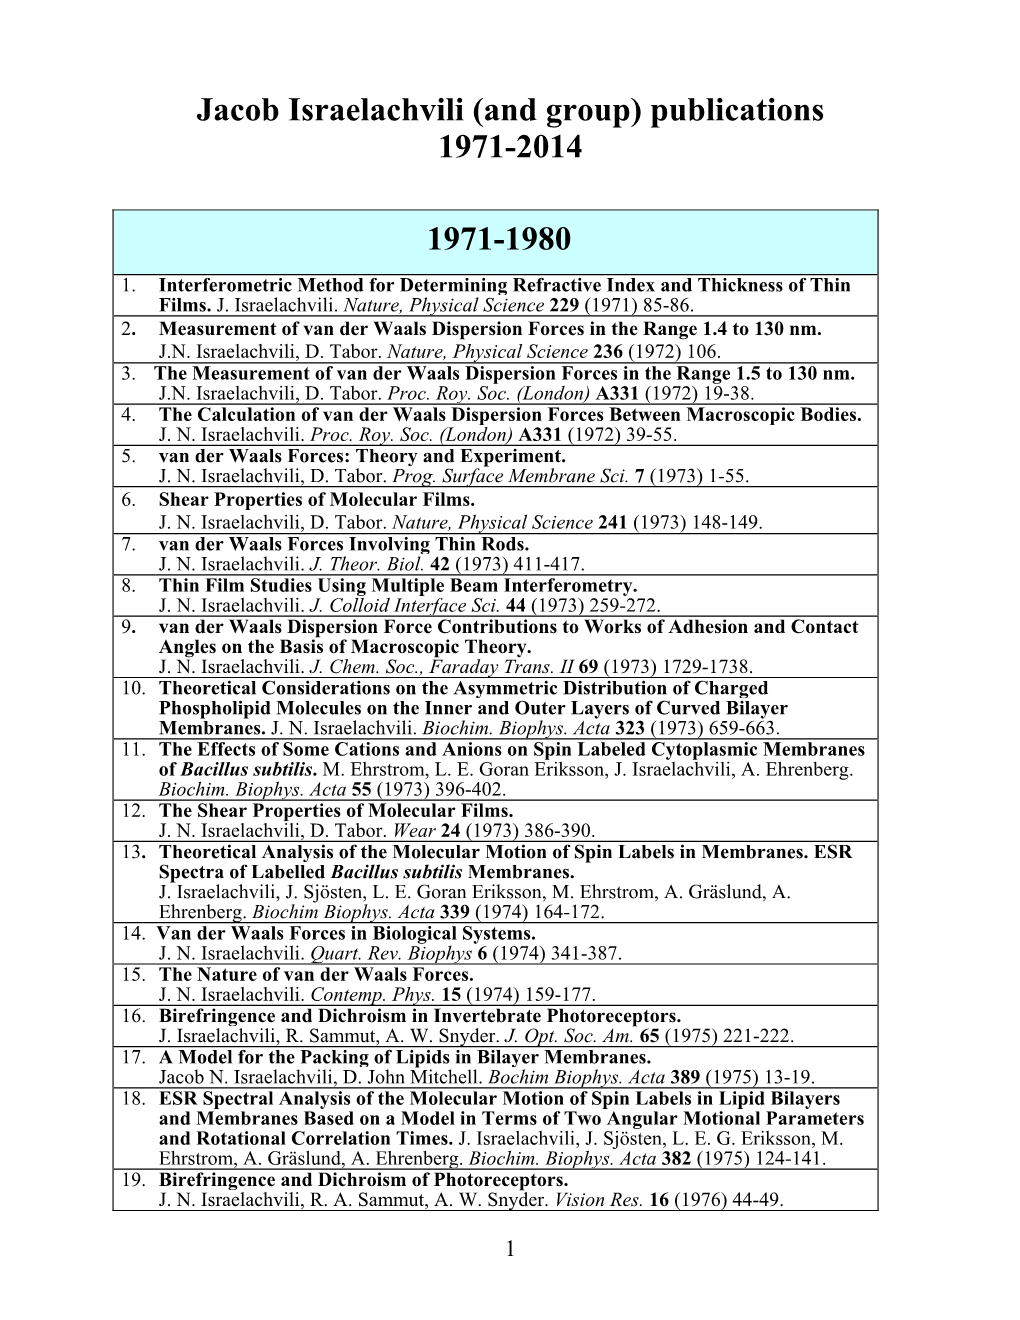 Jacob Israelachvili (And Group) Publications 1971-2014